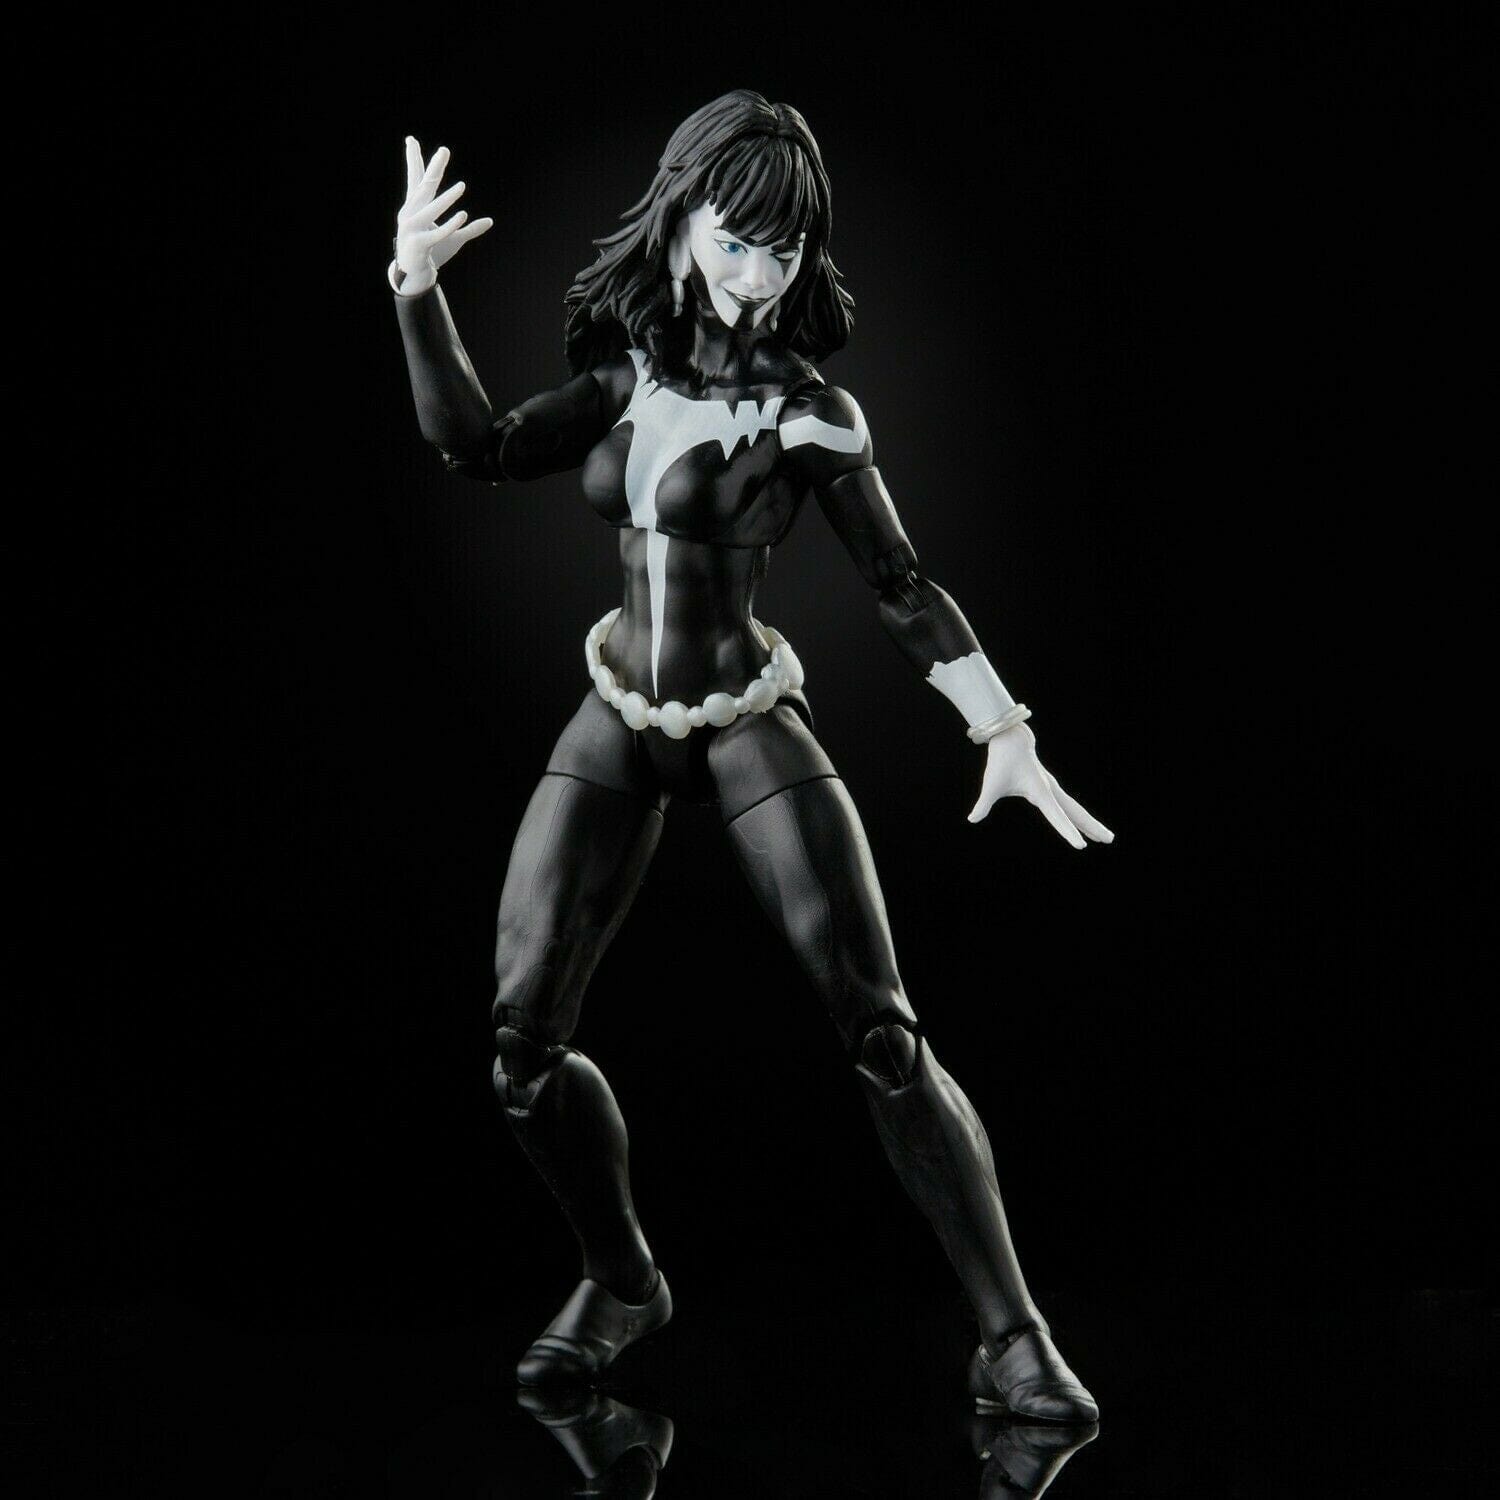 Hasbro Marvel Legends Series Marvel's Shriek 6 Inch Action Figure and Build-A-Figure Part Black background 